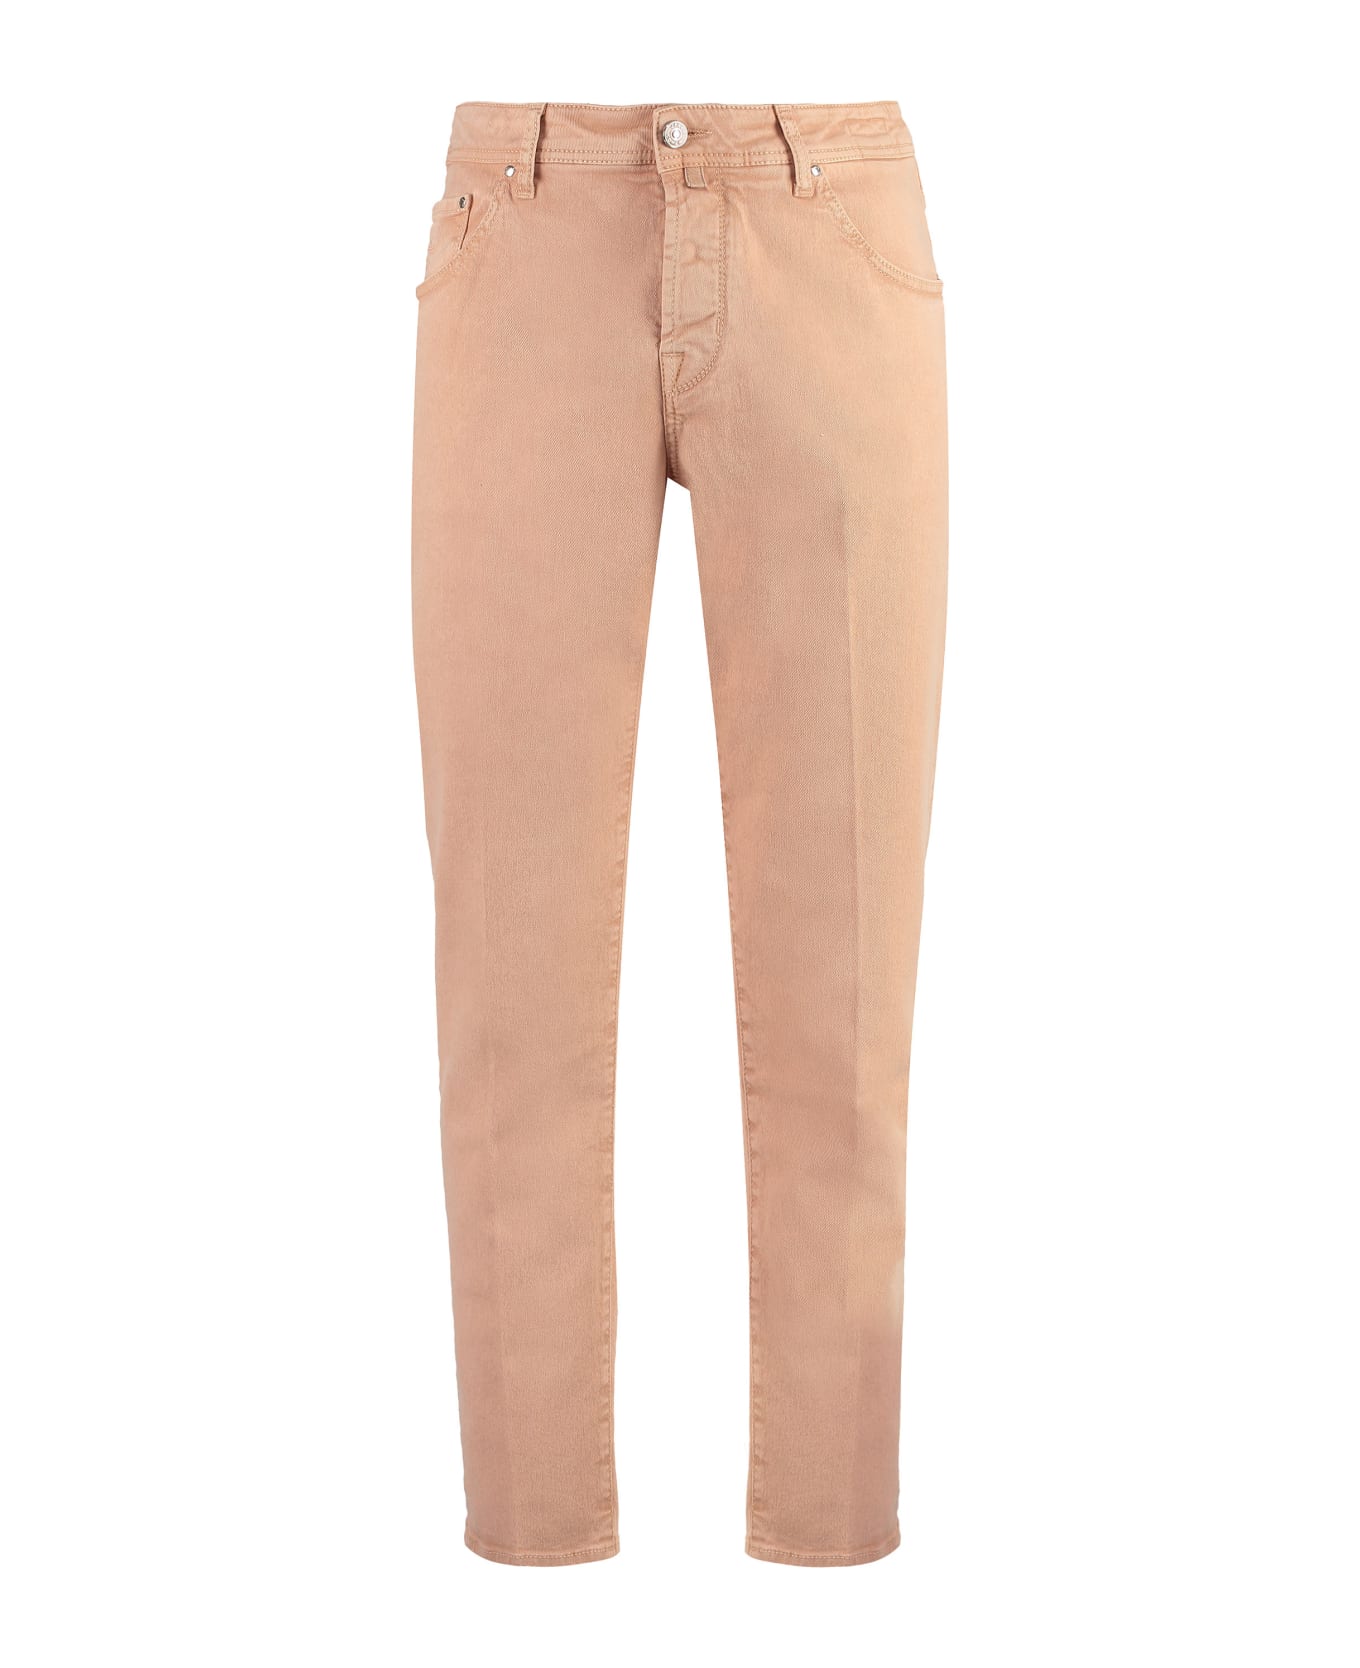 Jacob Cohen 5-pocket Slim Fit Jeans - Salmon pink